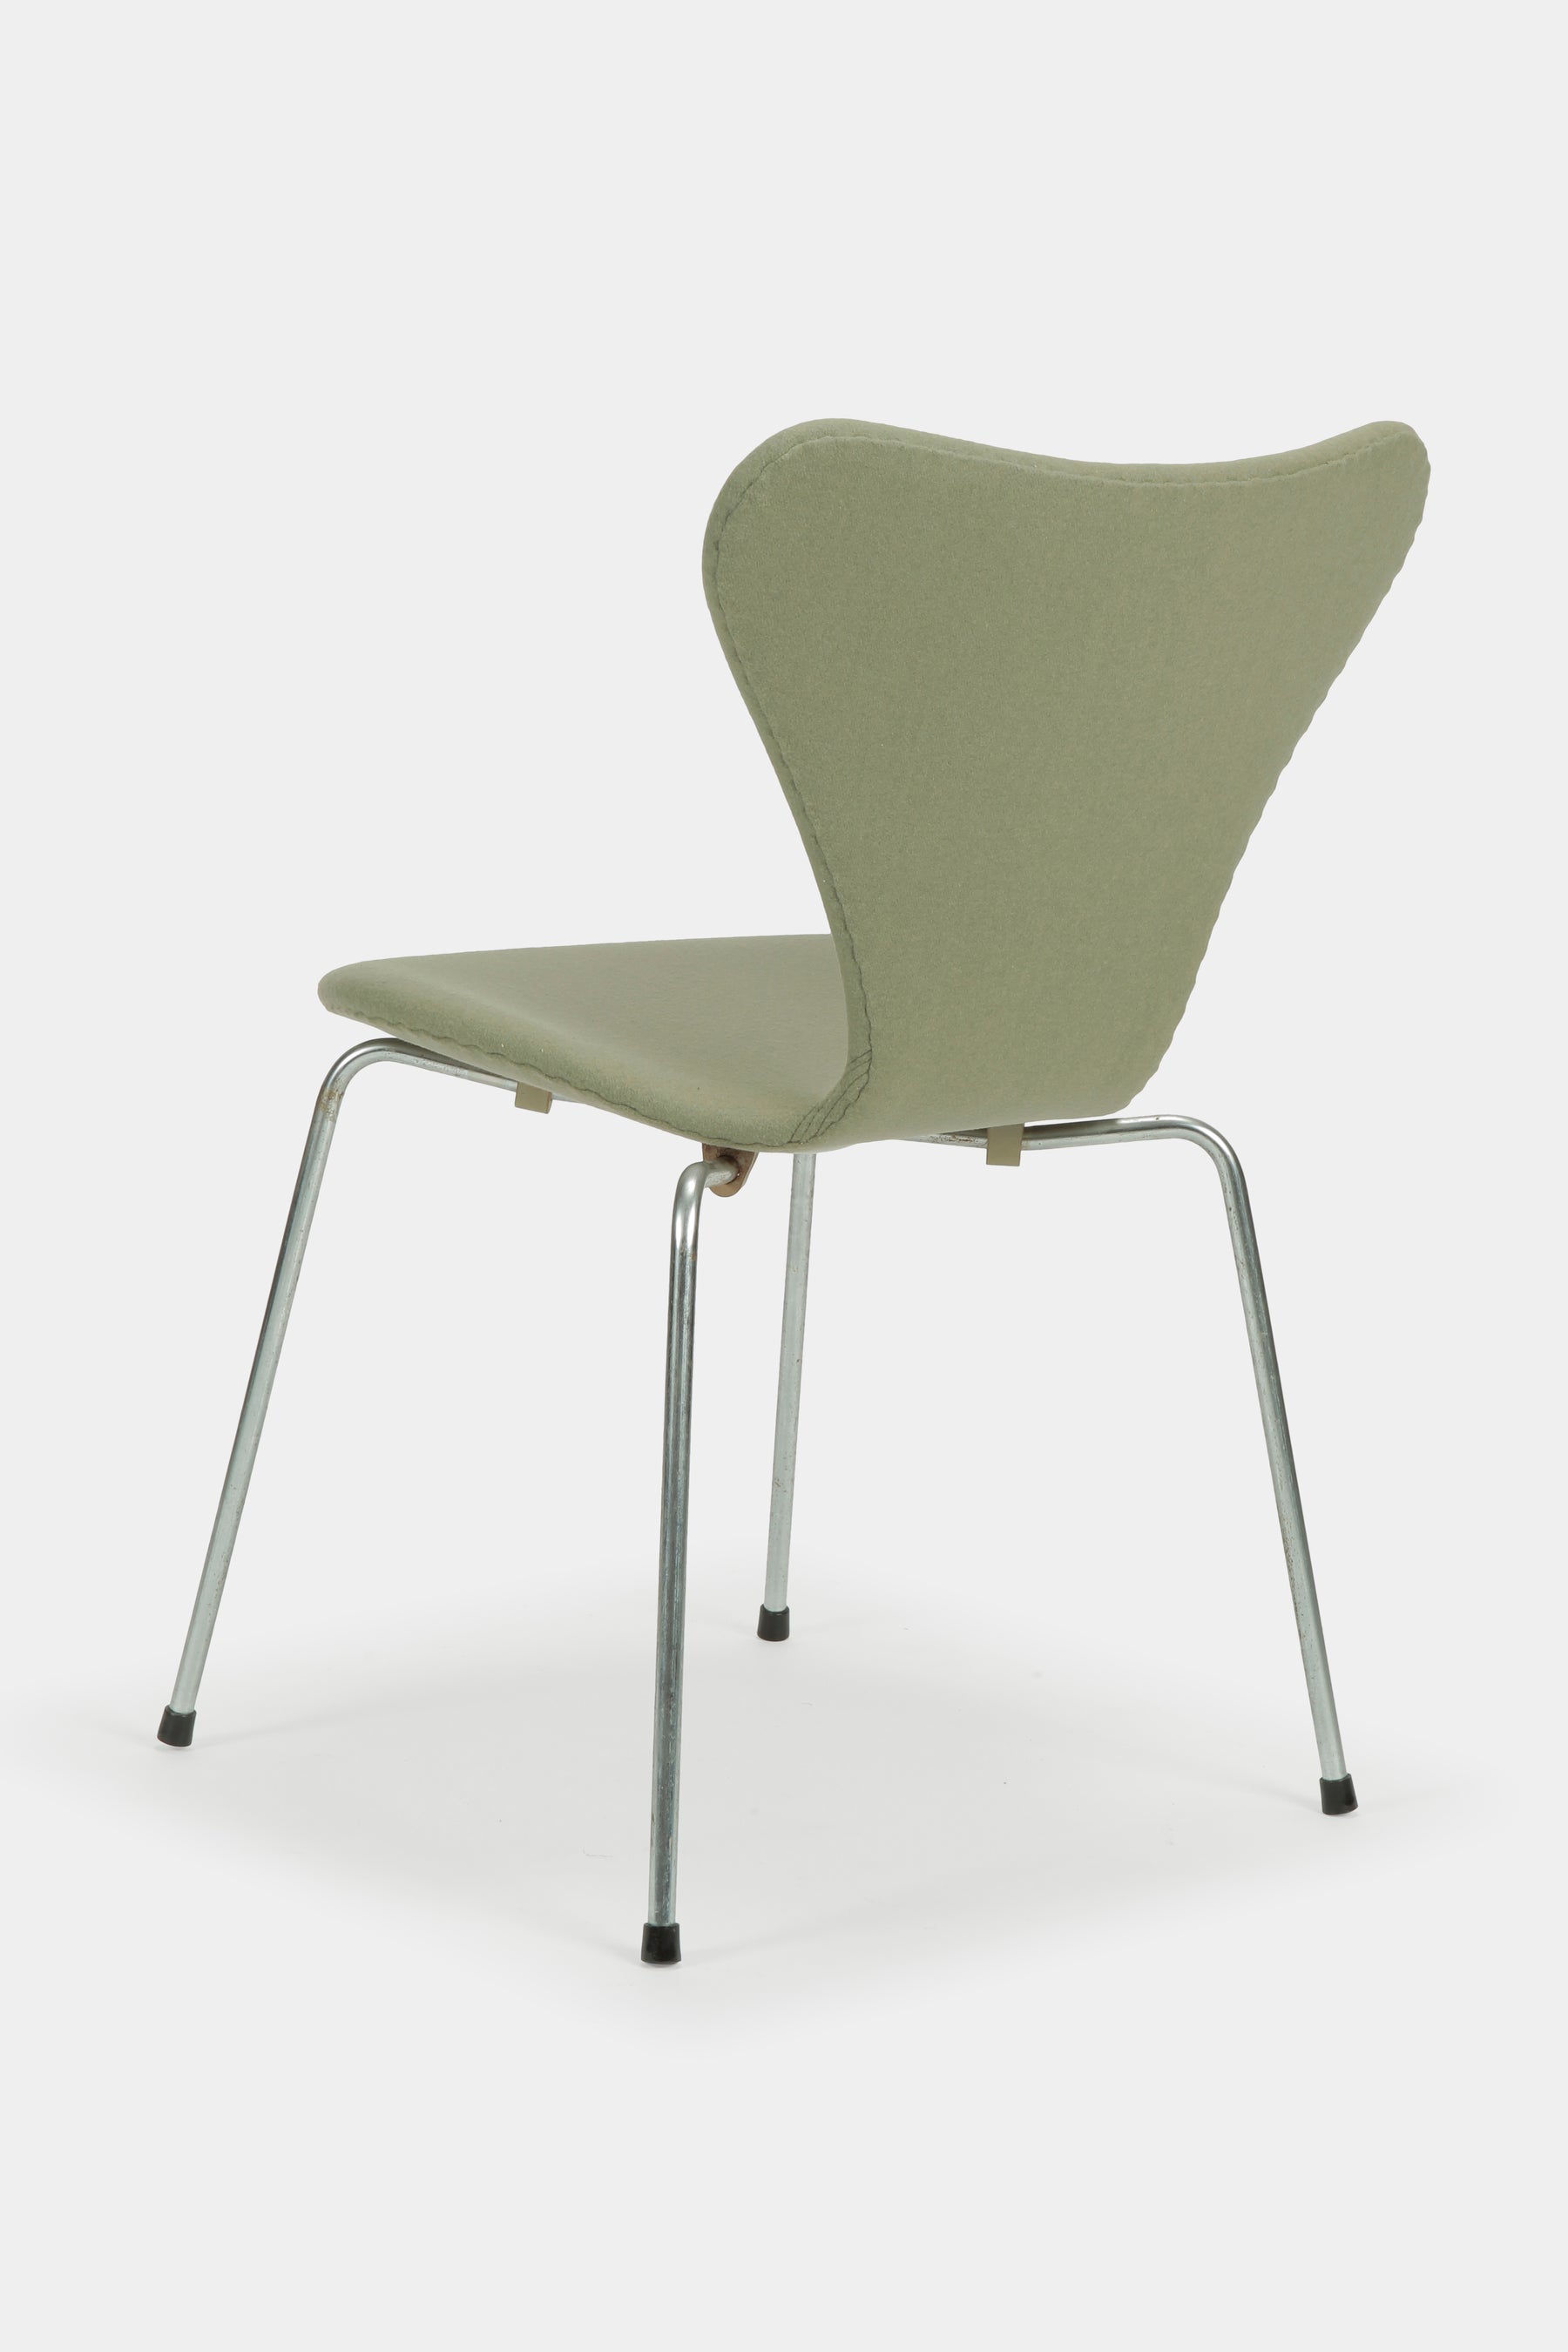 2 Arne Jacobsen 3107 chairs, Flanel